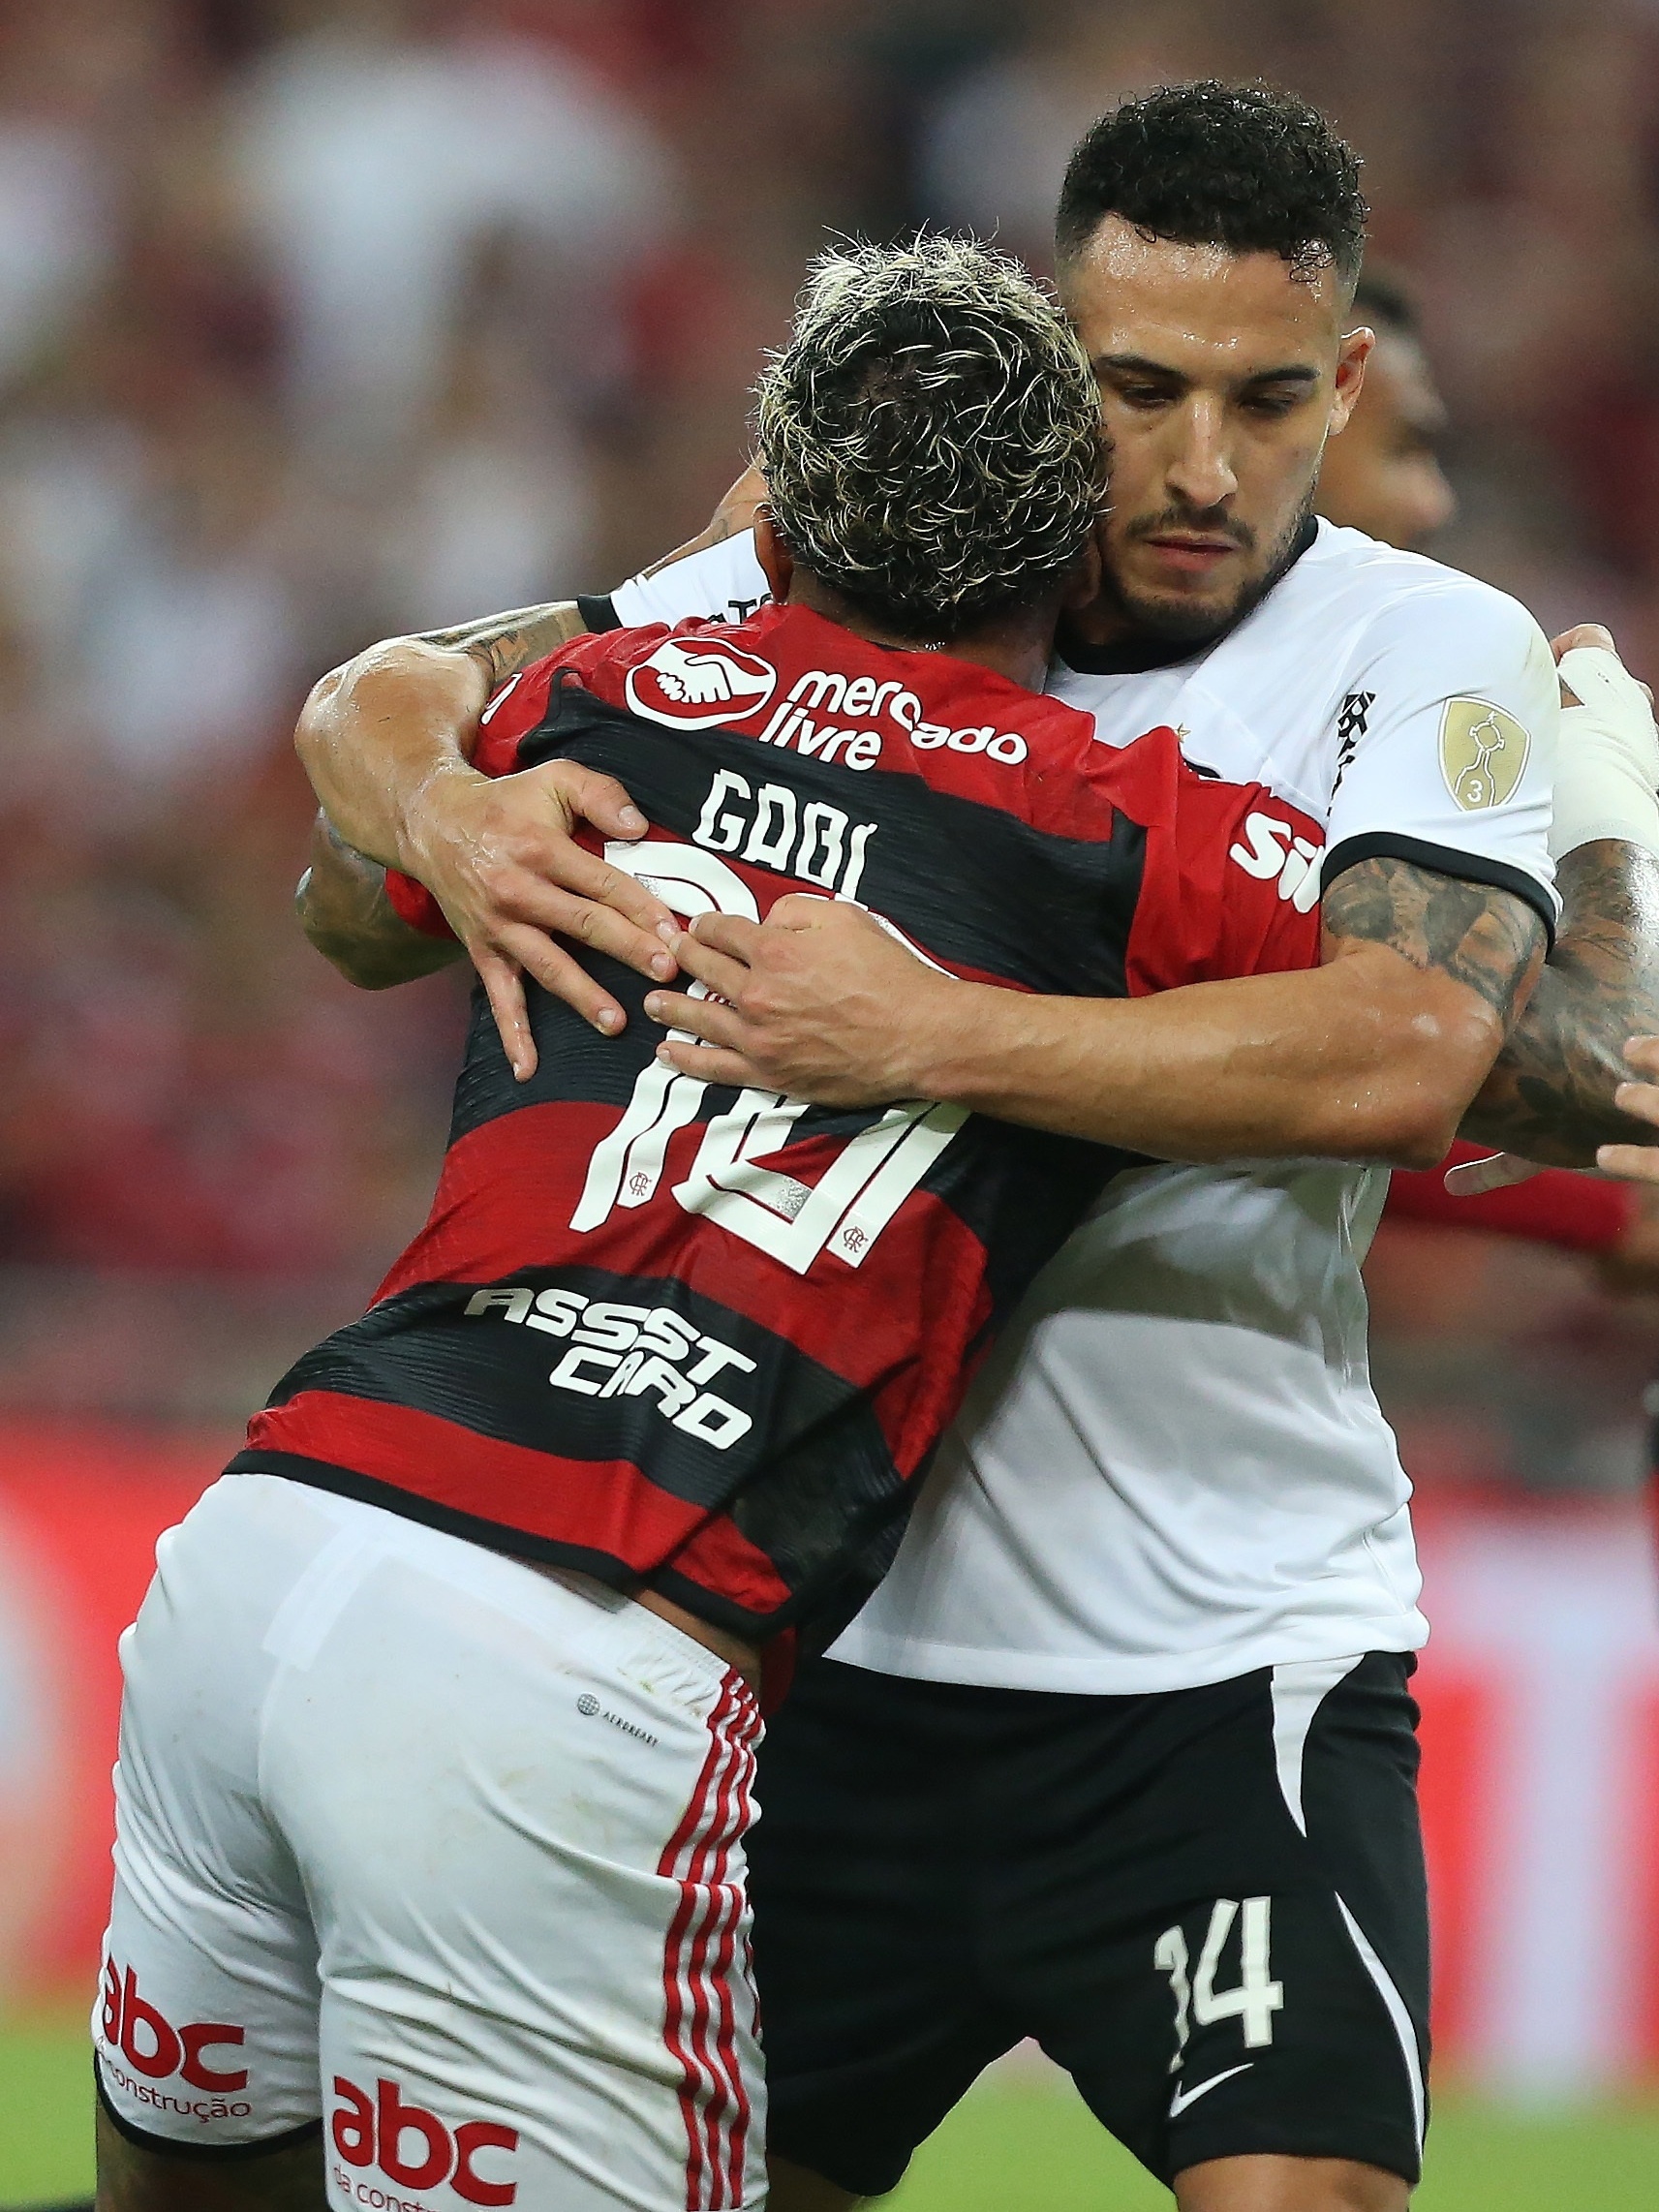 Olimpia x Flamengo: prováveis times, desfalques, onde assistir e palpites